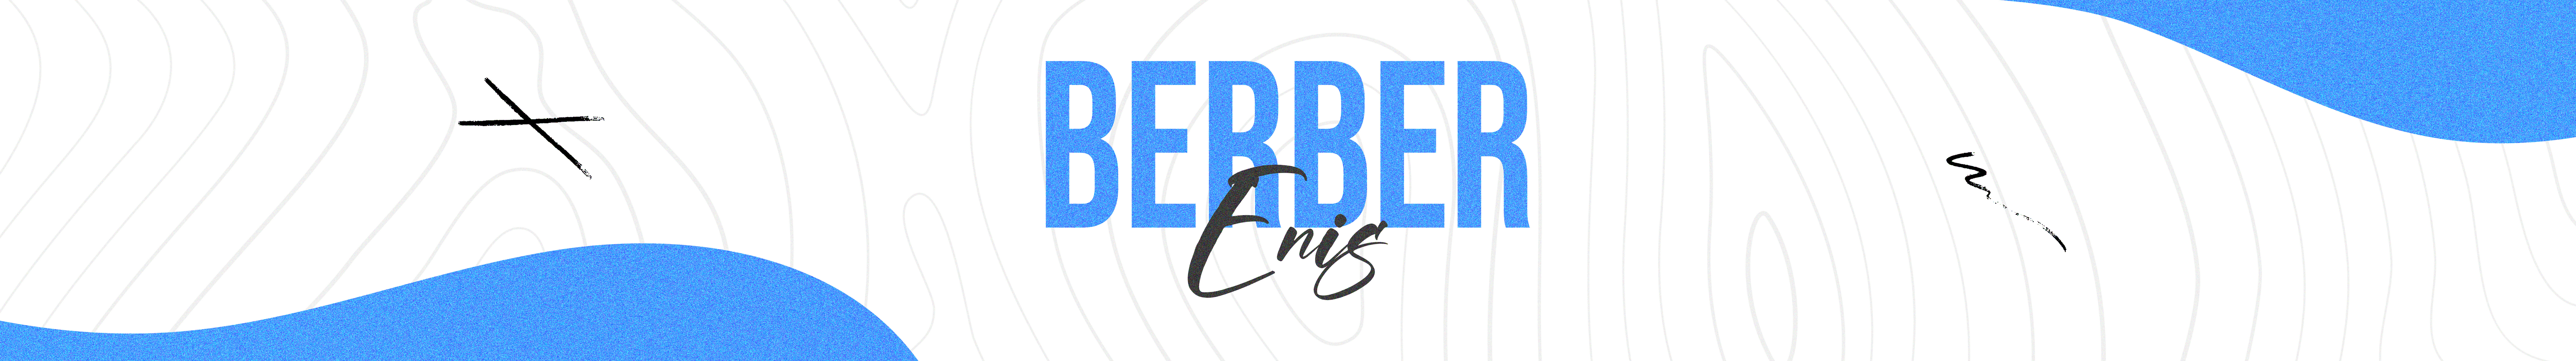 Enis Berber's profile banner